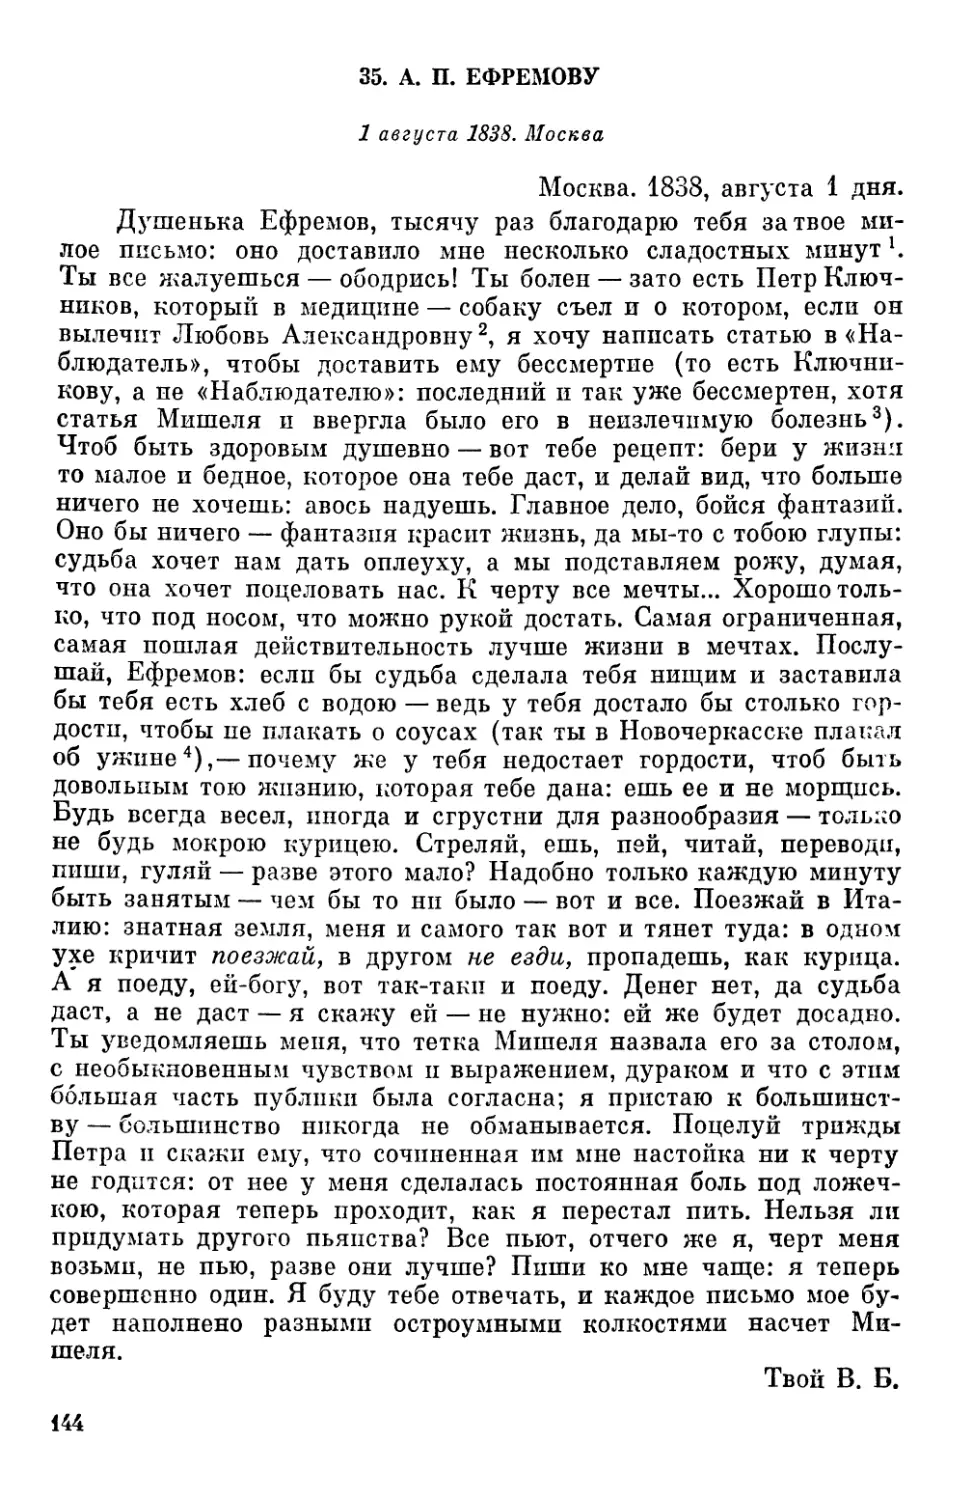 35. А. П. Ефремову. 1 августа 1838